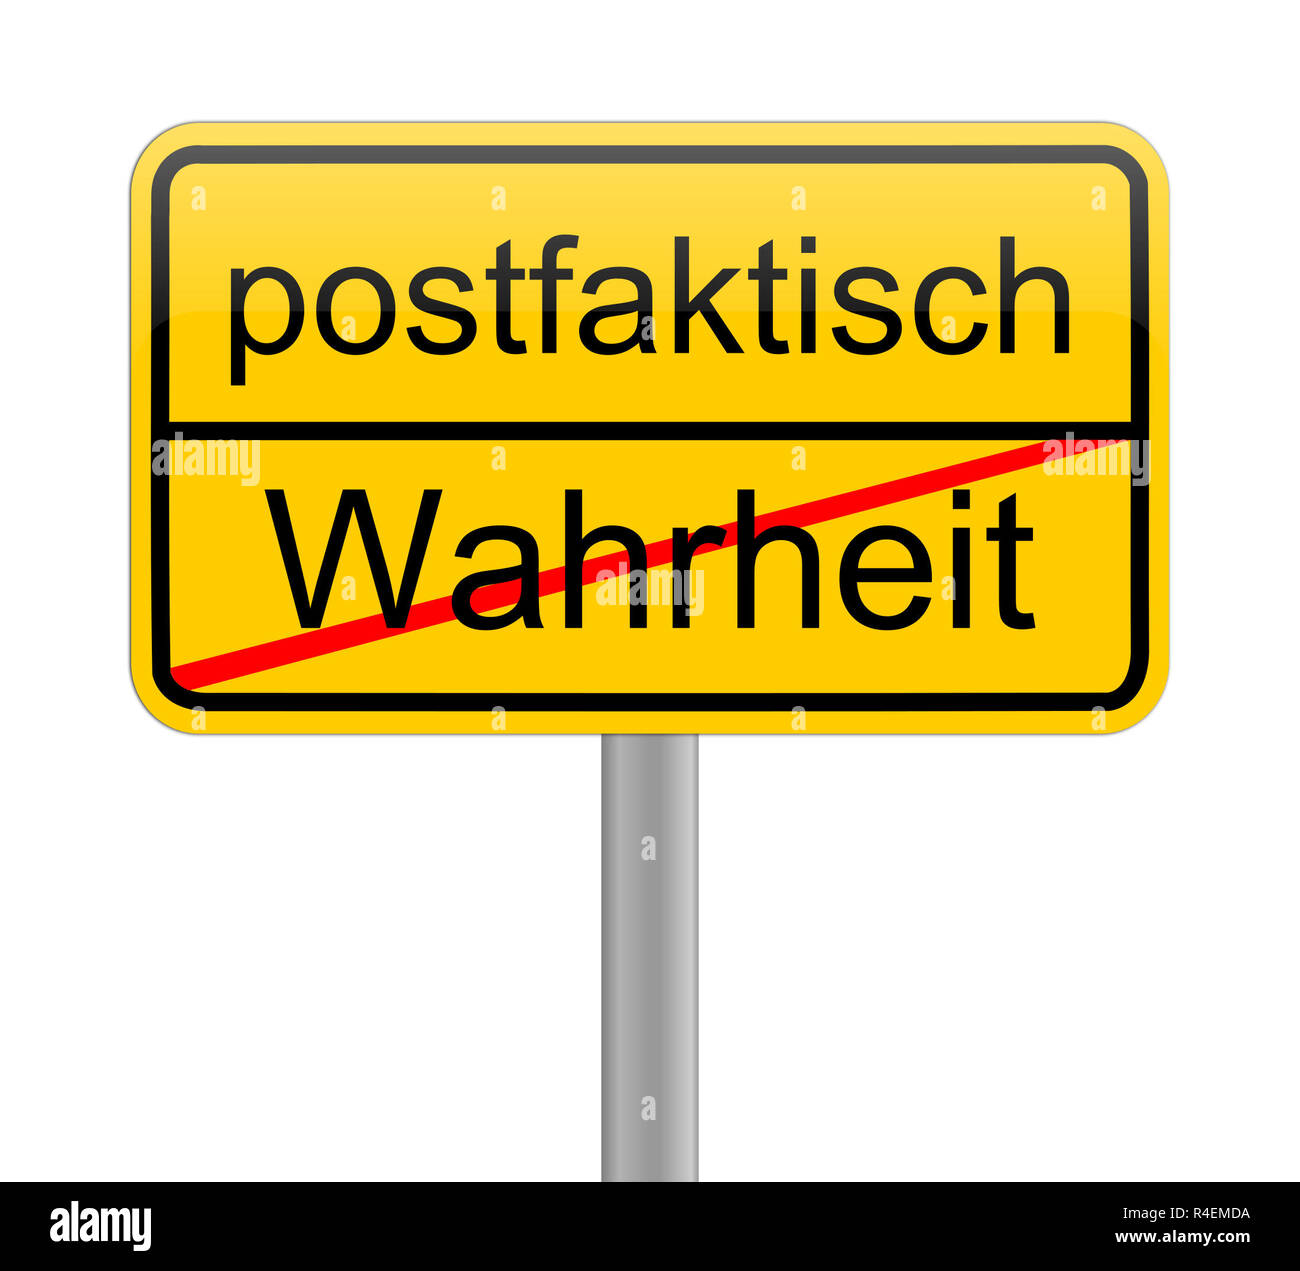 Post-Truth sign - in german postfaktisch Stock Photo